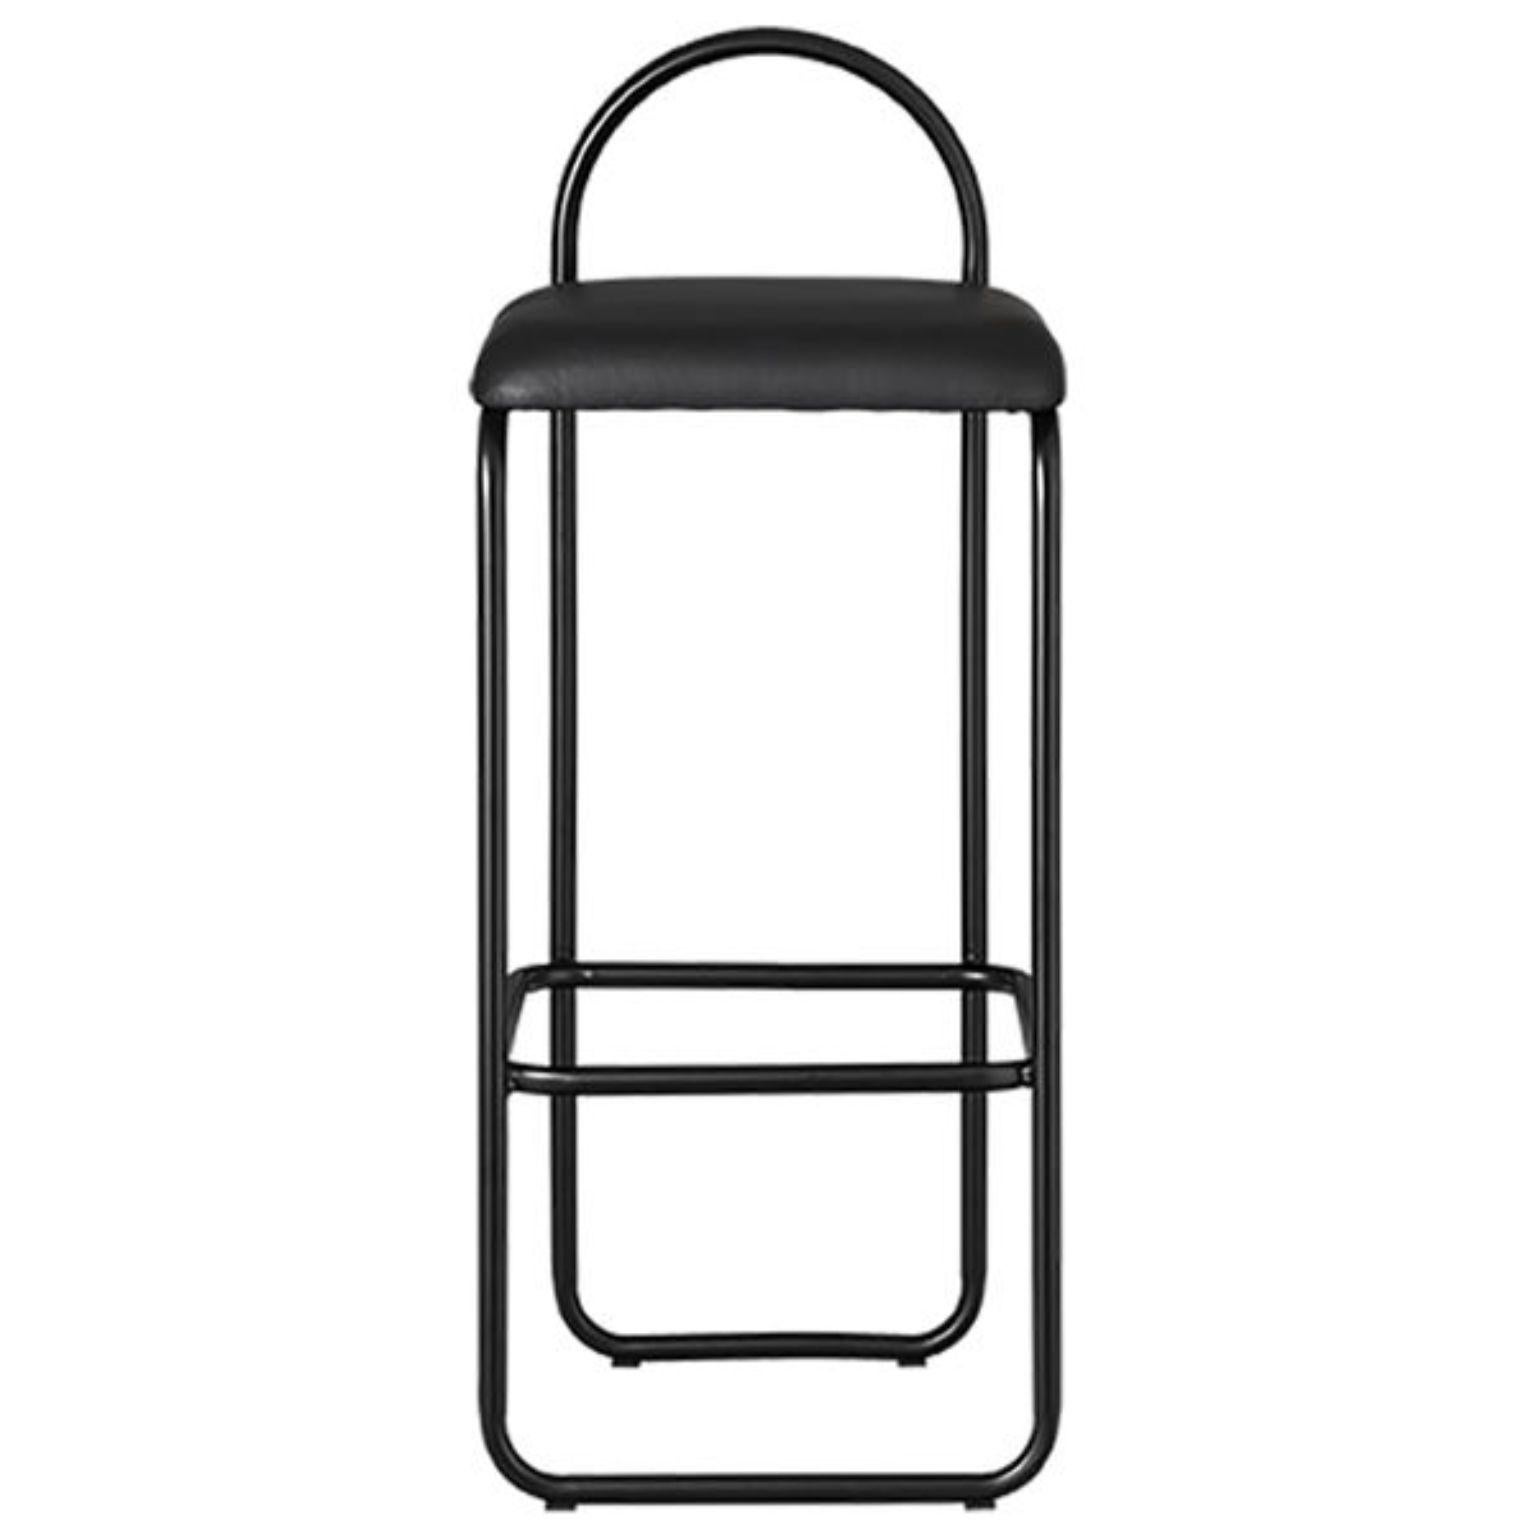 Black leather minimalist bar chair
Dimensions: L 37 x W 39 x H 92.5 cm
Materials: Leather, steel.

      